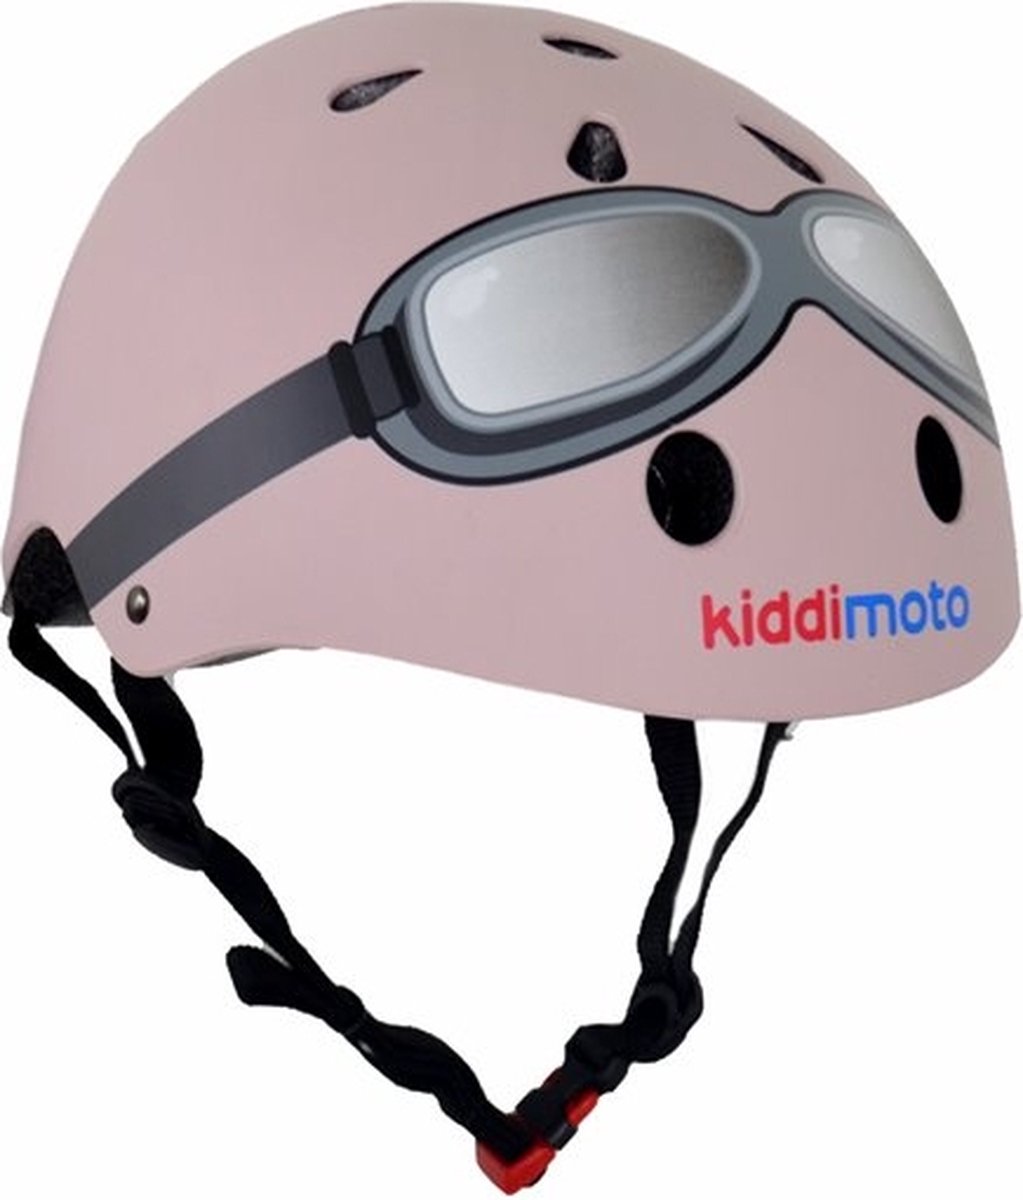 KiddiMoto Helm Goggle Pastel Pink - S